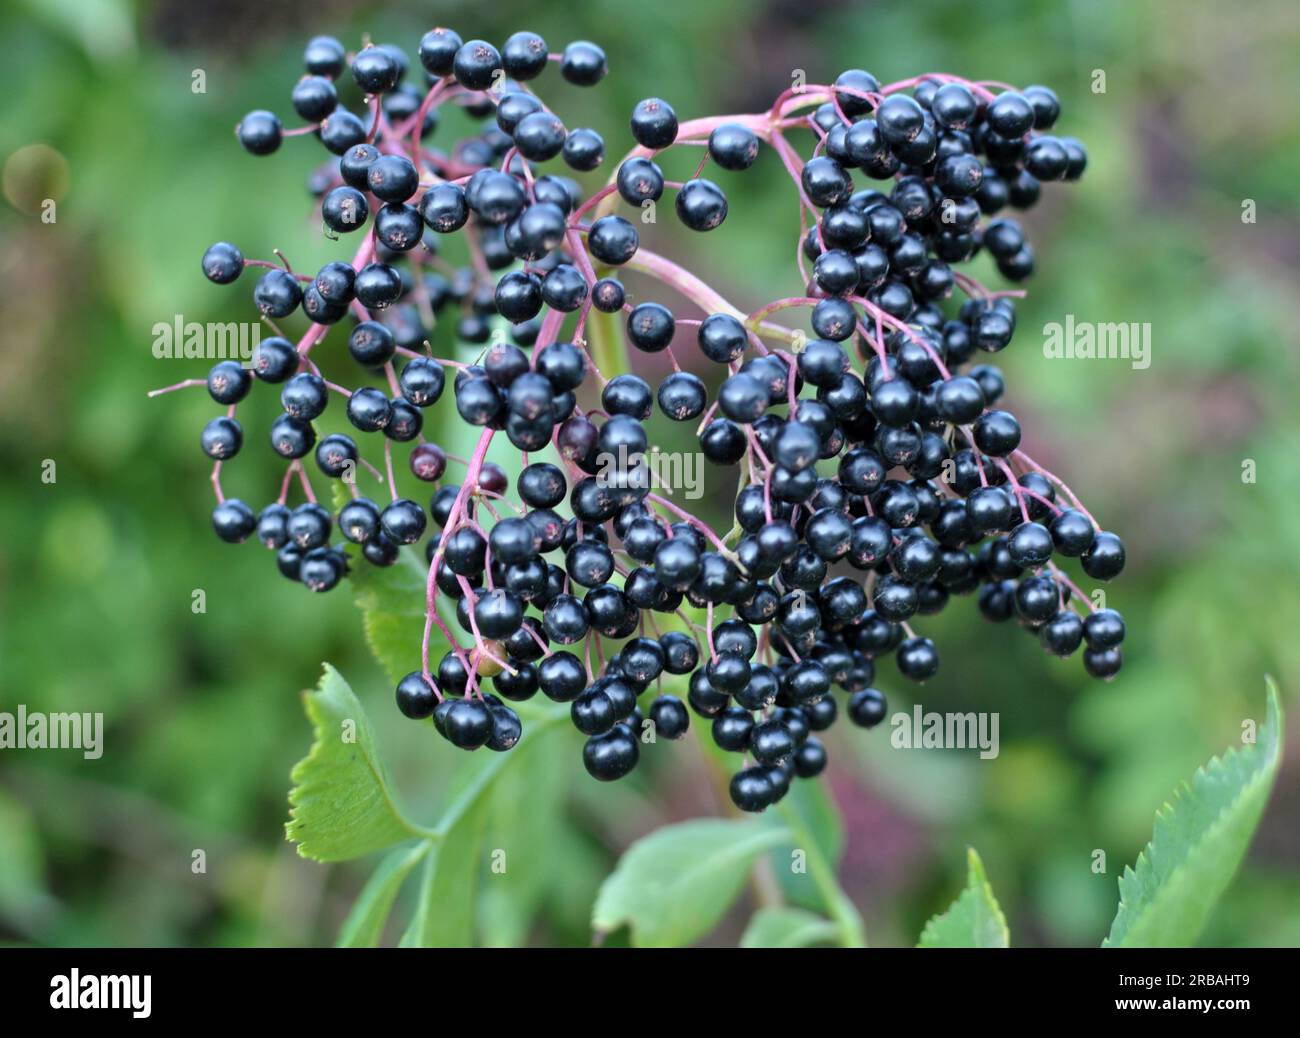 Bunch of elderberries with ripe black berries Stock Photo